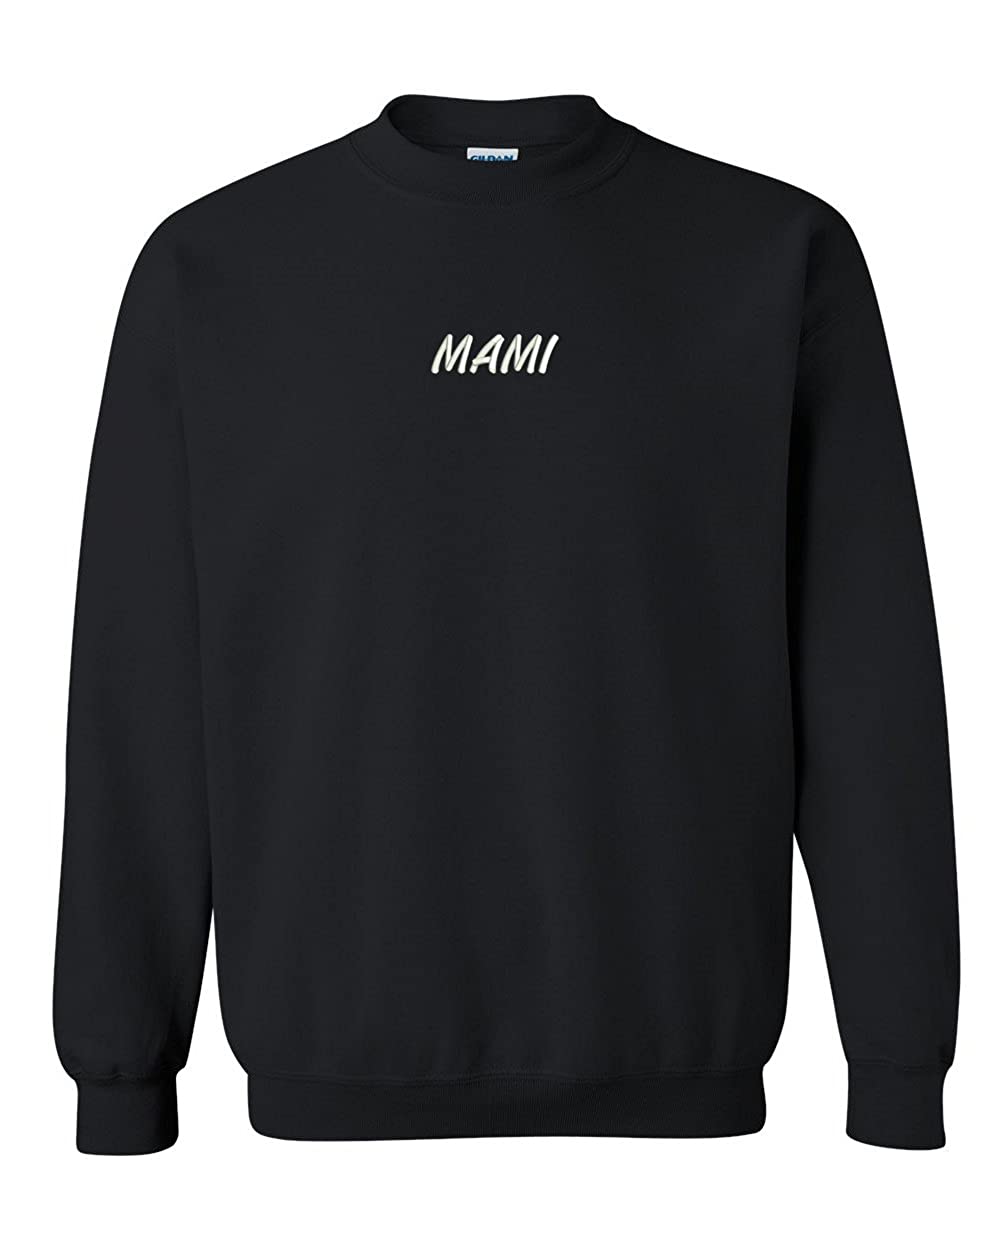 Trendy Apparel Shop Mami Embroidered Crewneck Sweatshirt